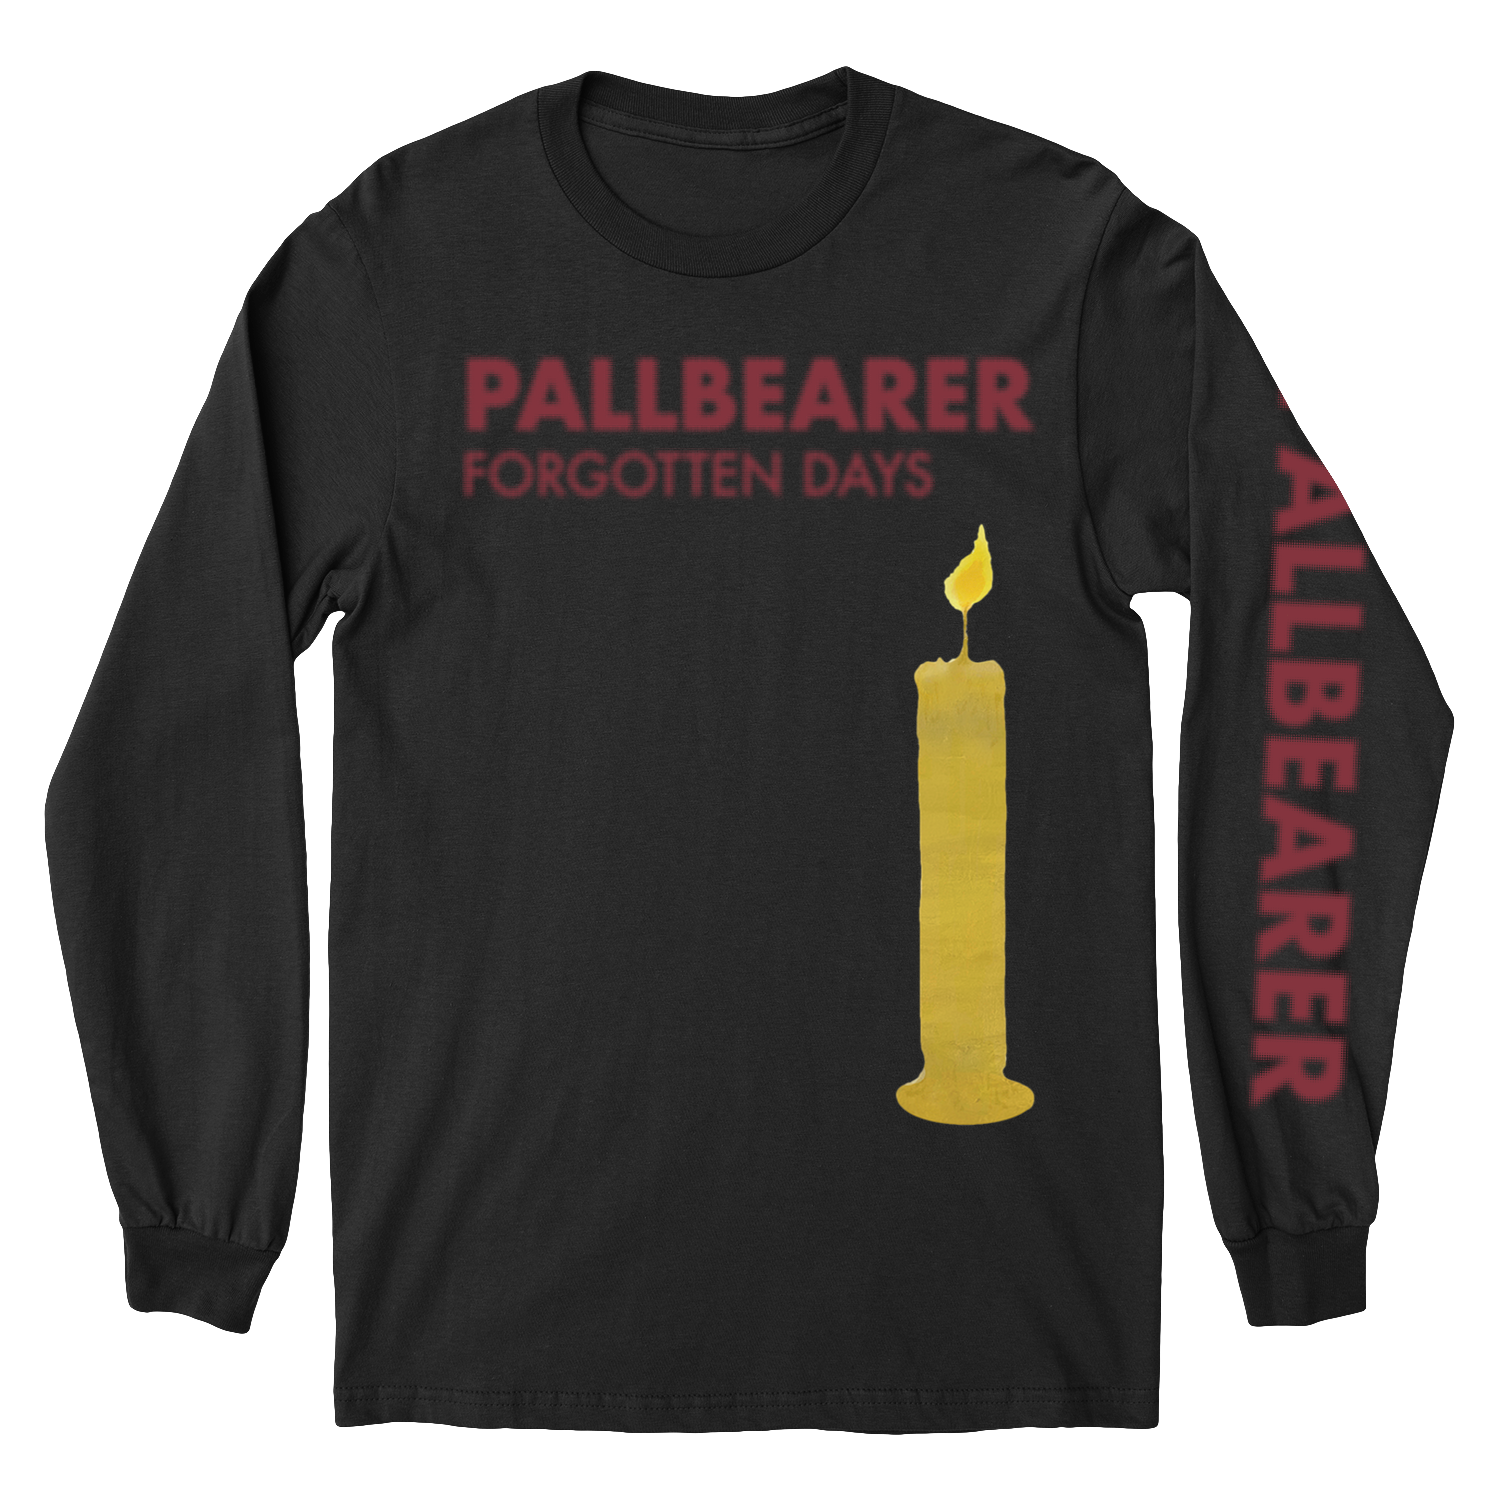 PALLBEARER "Forgotten Days" Black Longsleeve (Final Run)